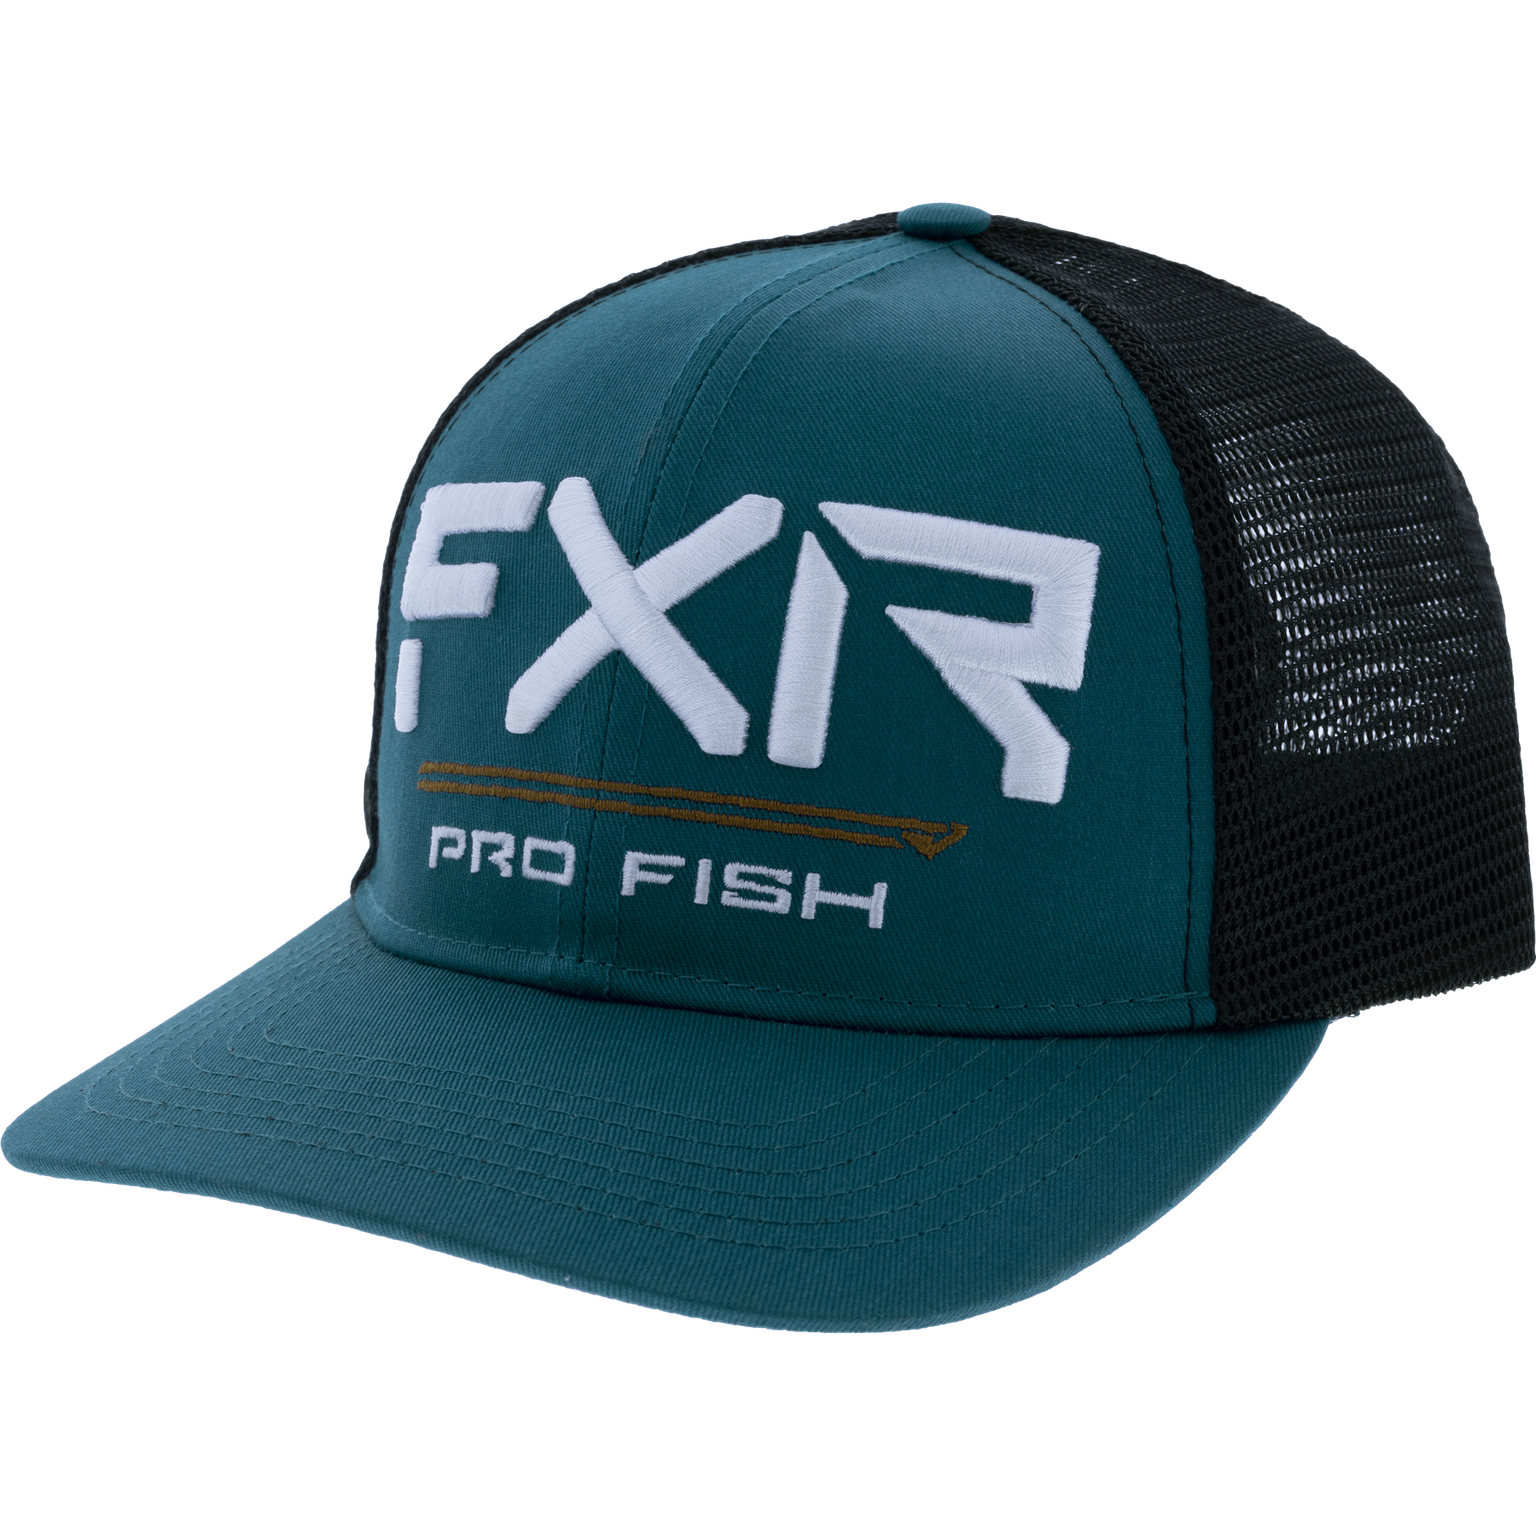 fxr racing snapback hats adult pro fish